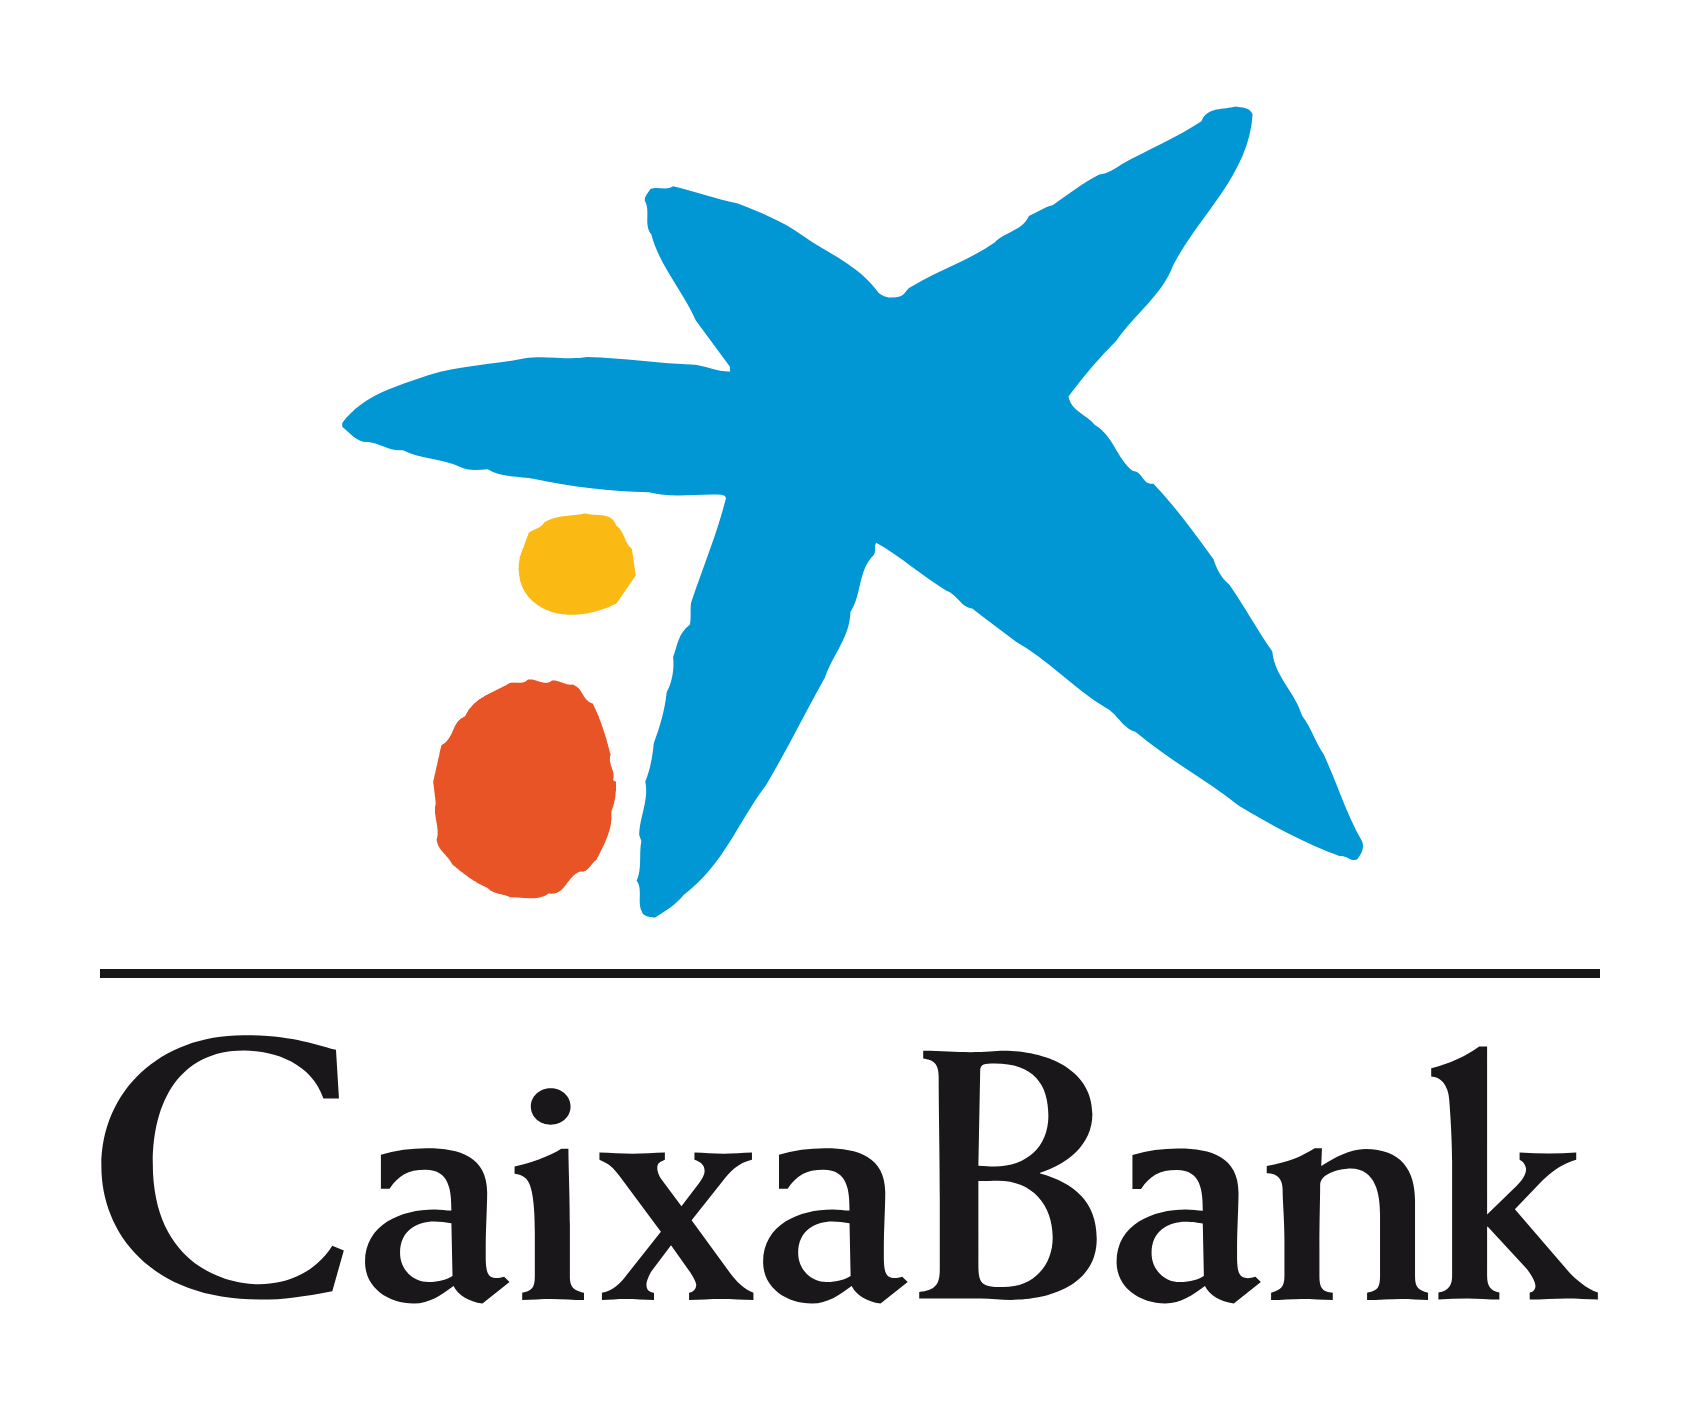 CaixaBank Vertical